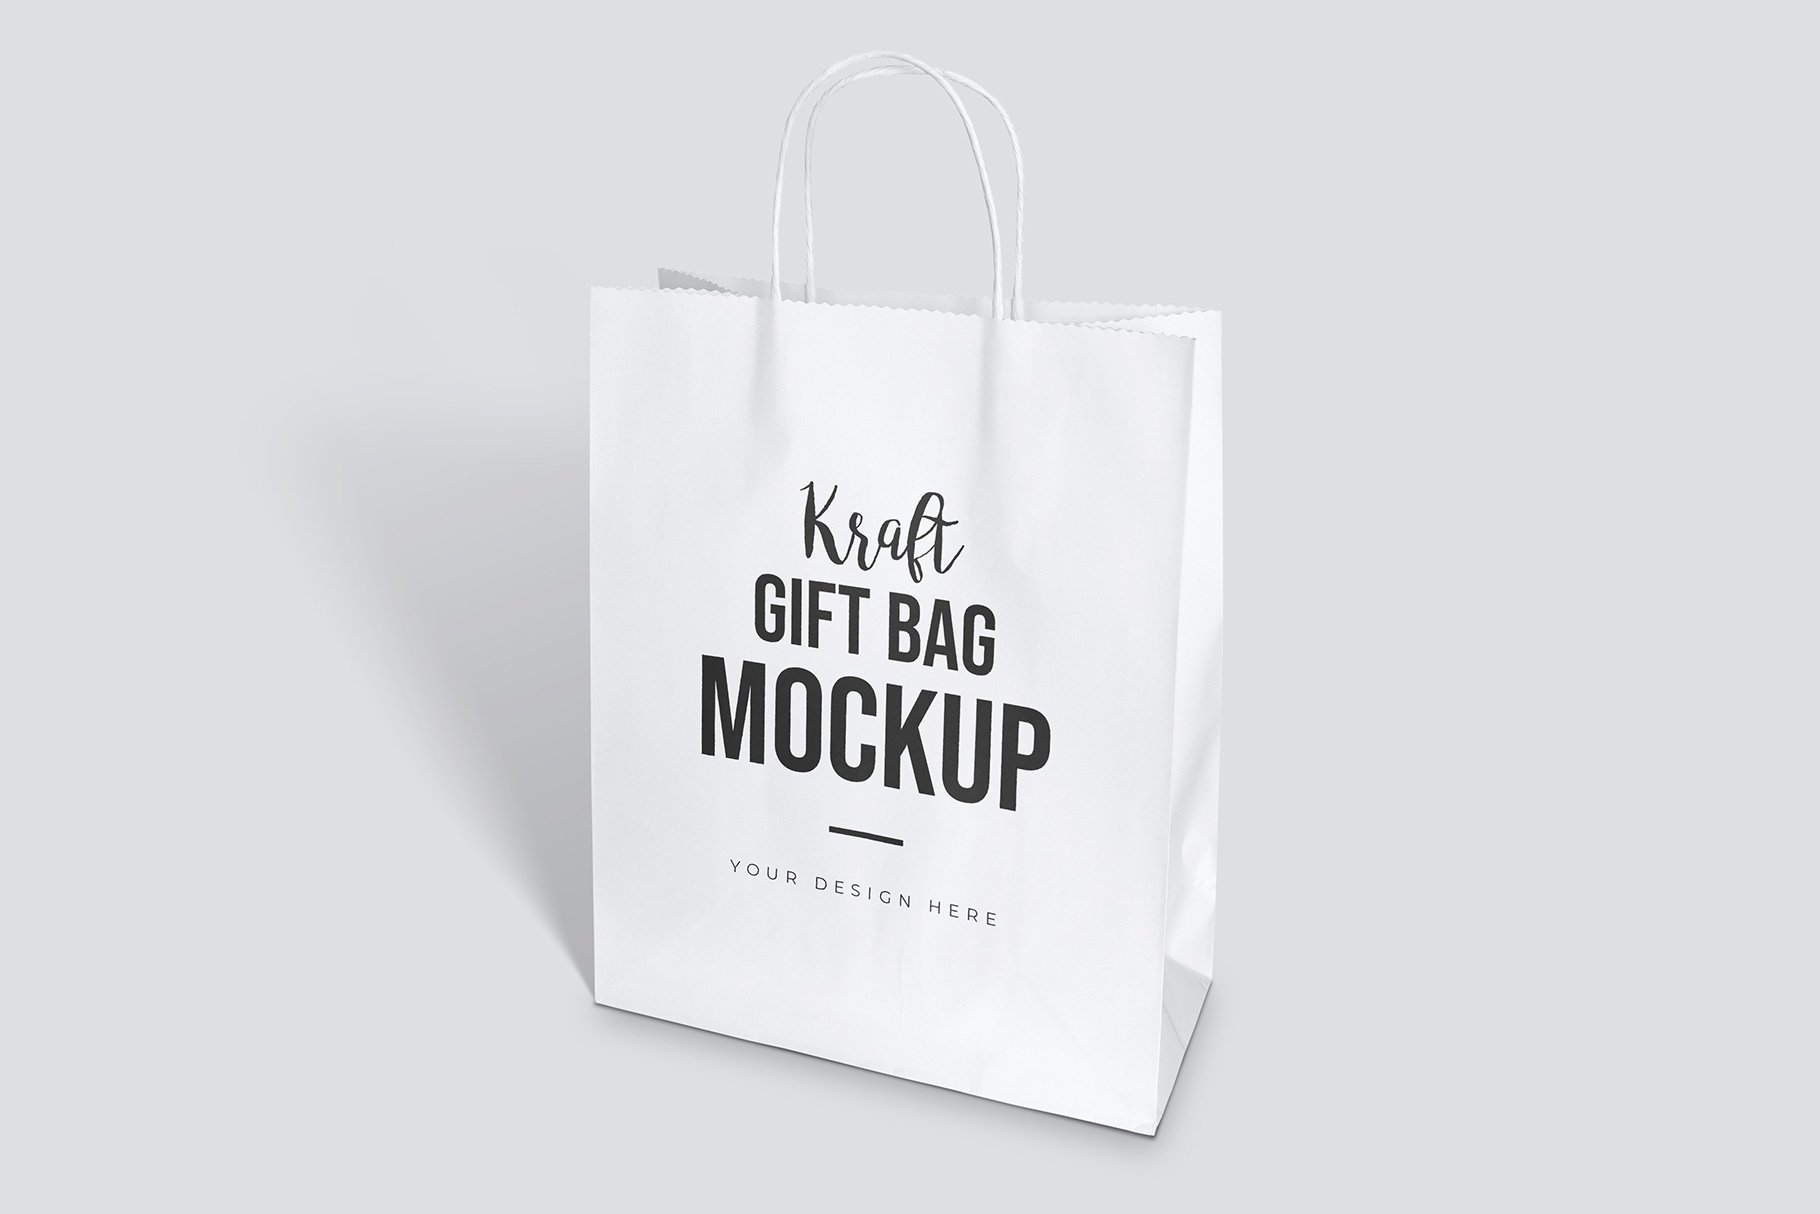 Kraft Gift Bag Mockup cover image.